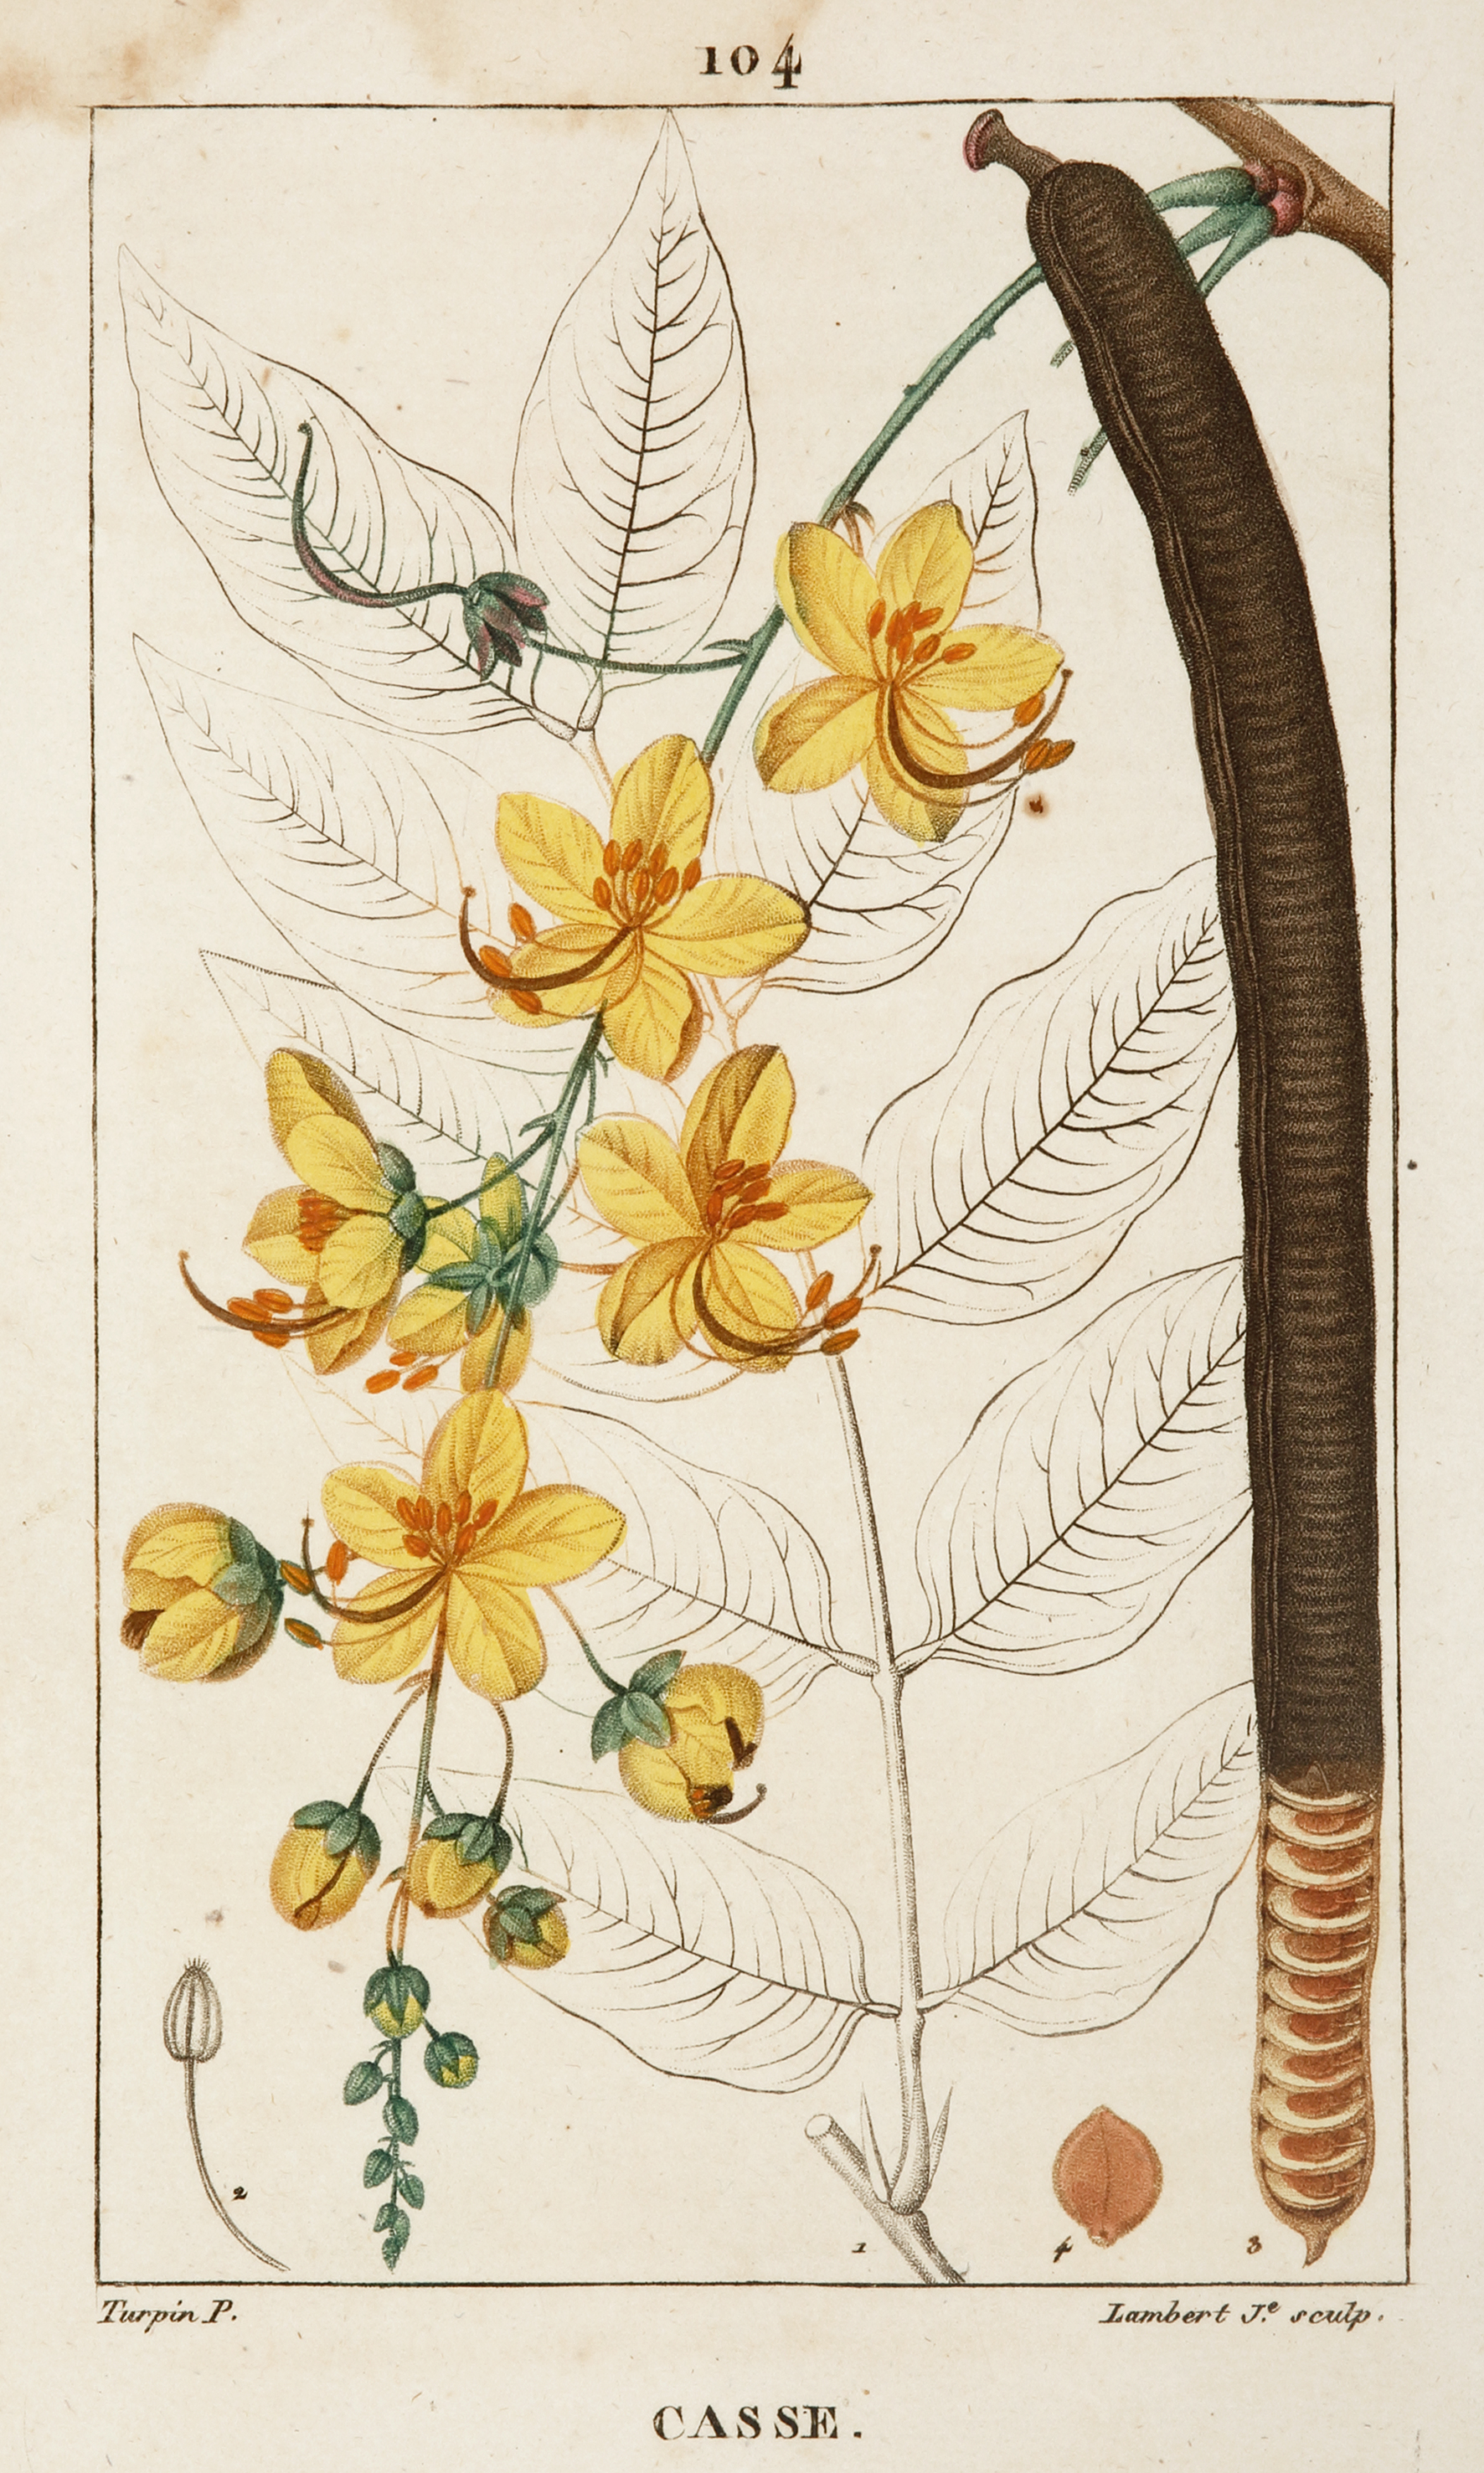 Casse [Cassia] - Antique Print from 1816